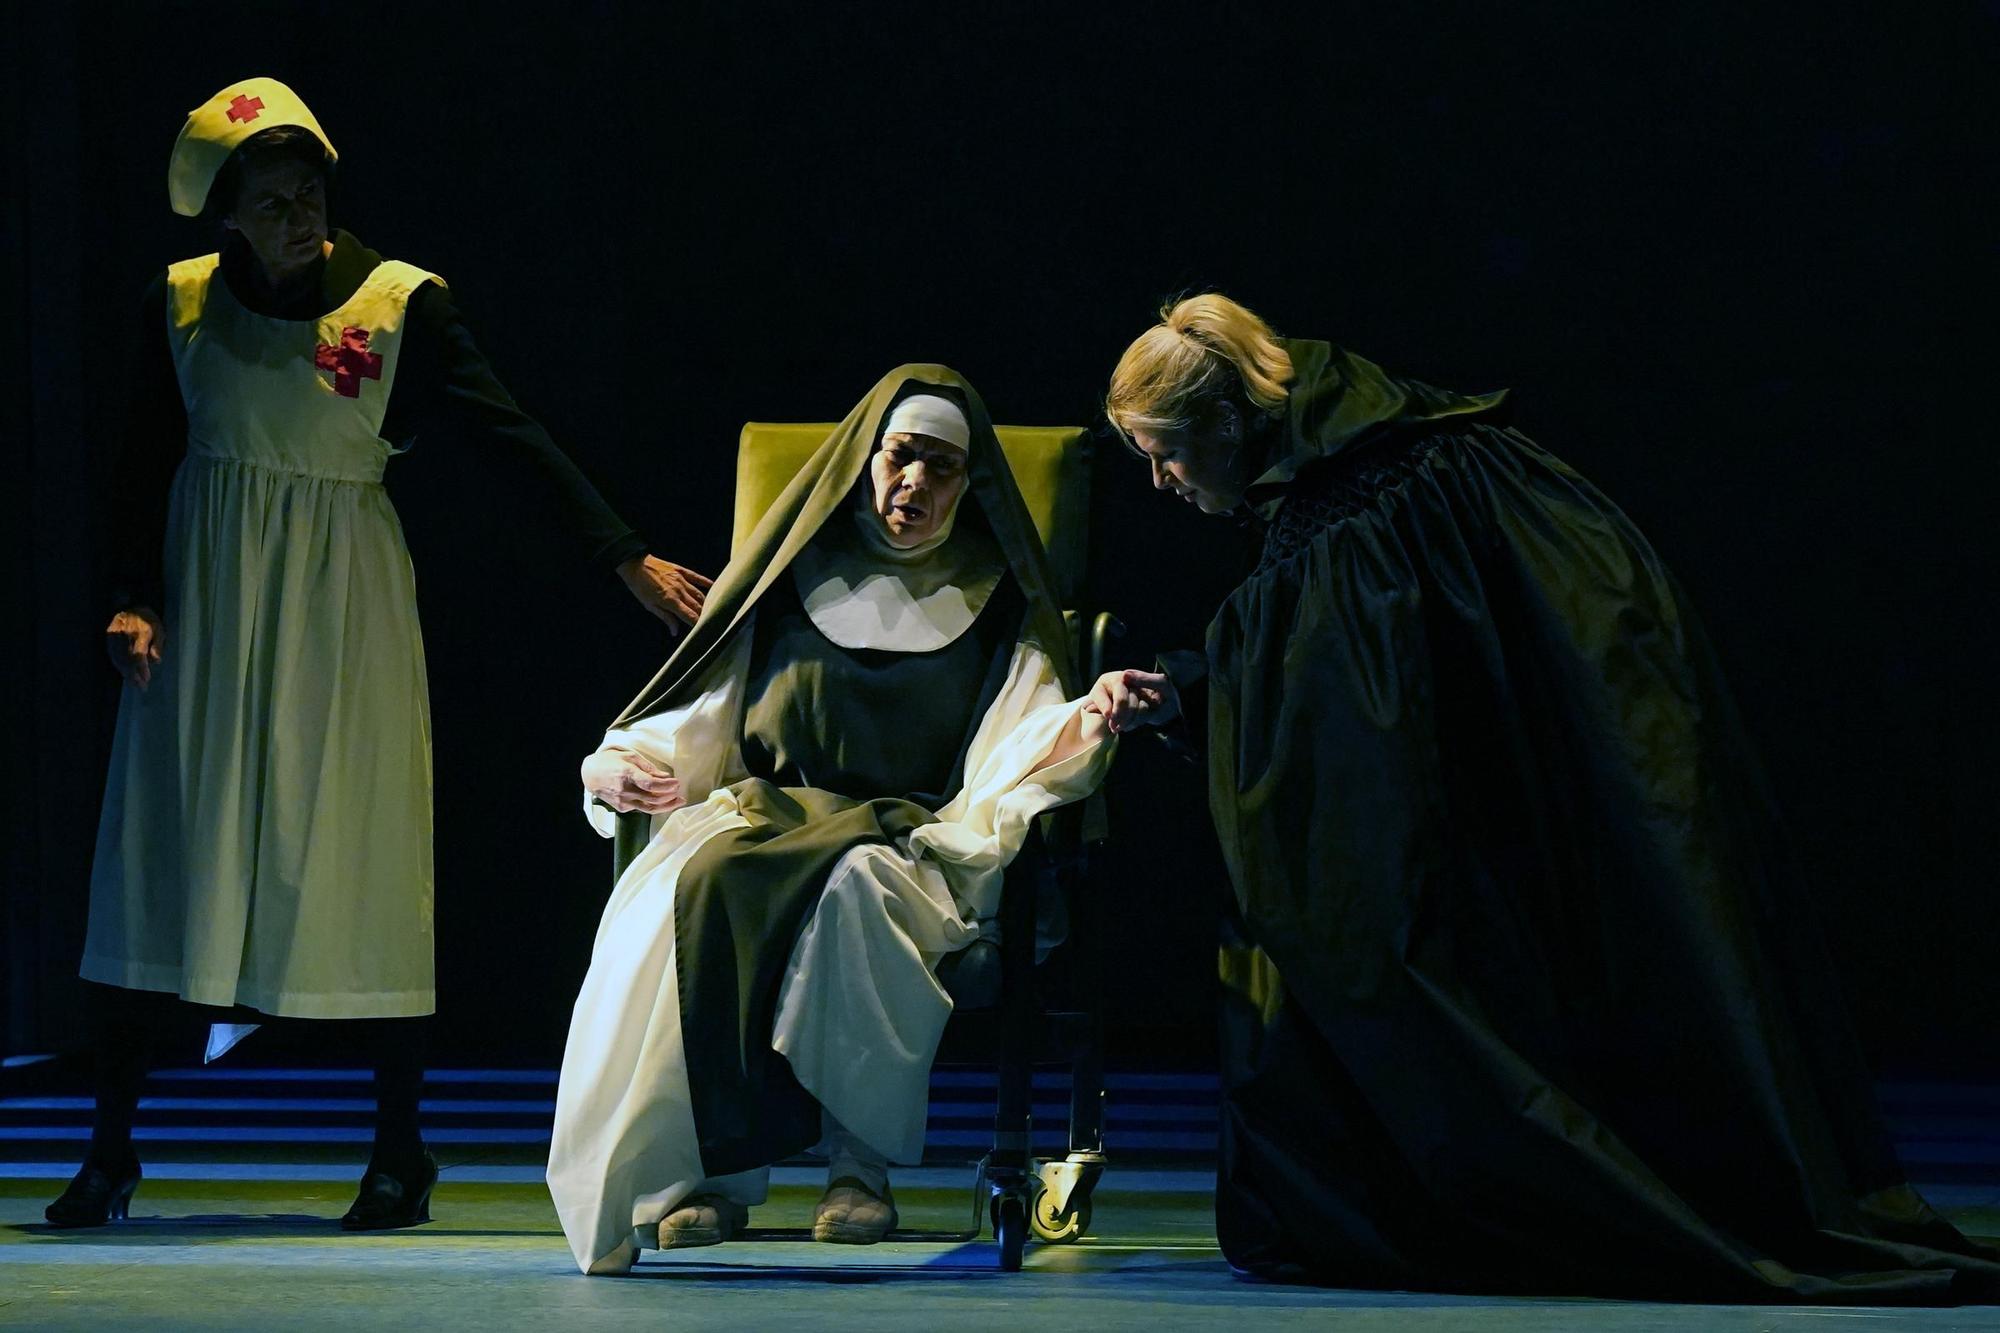 Ensayos de la ópera 'Dialogues des carmélites' en el Teatro Cervantes